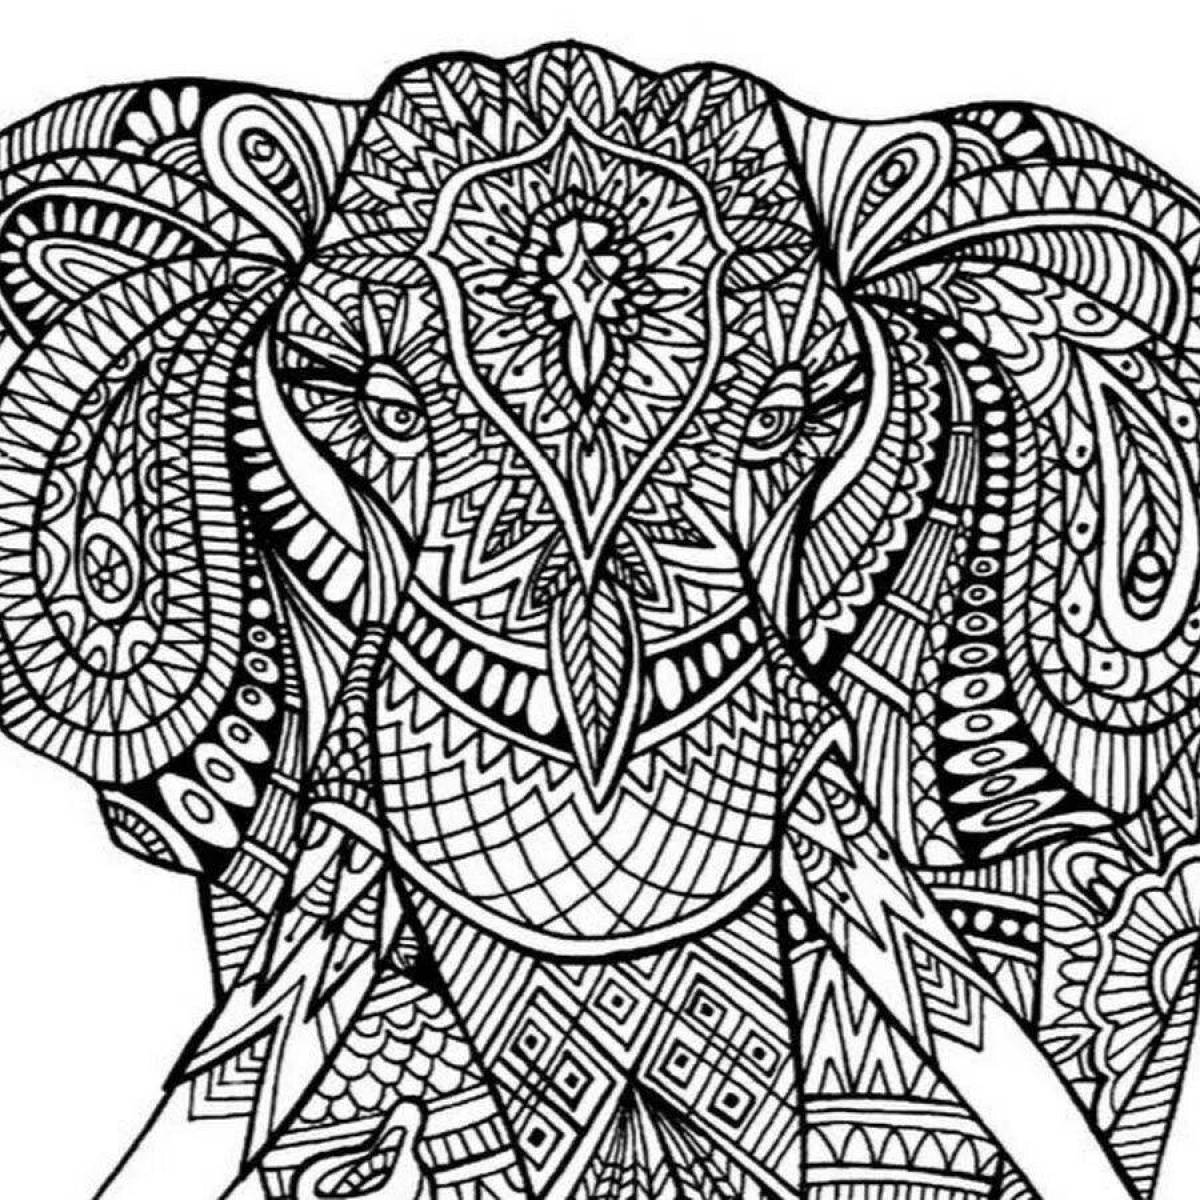 Shiny anti-stress elephant coloring book